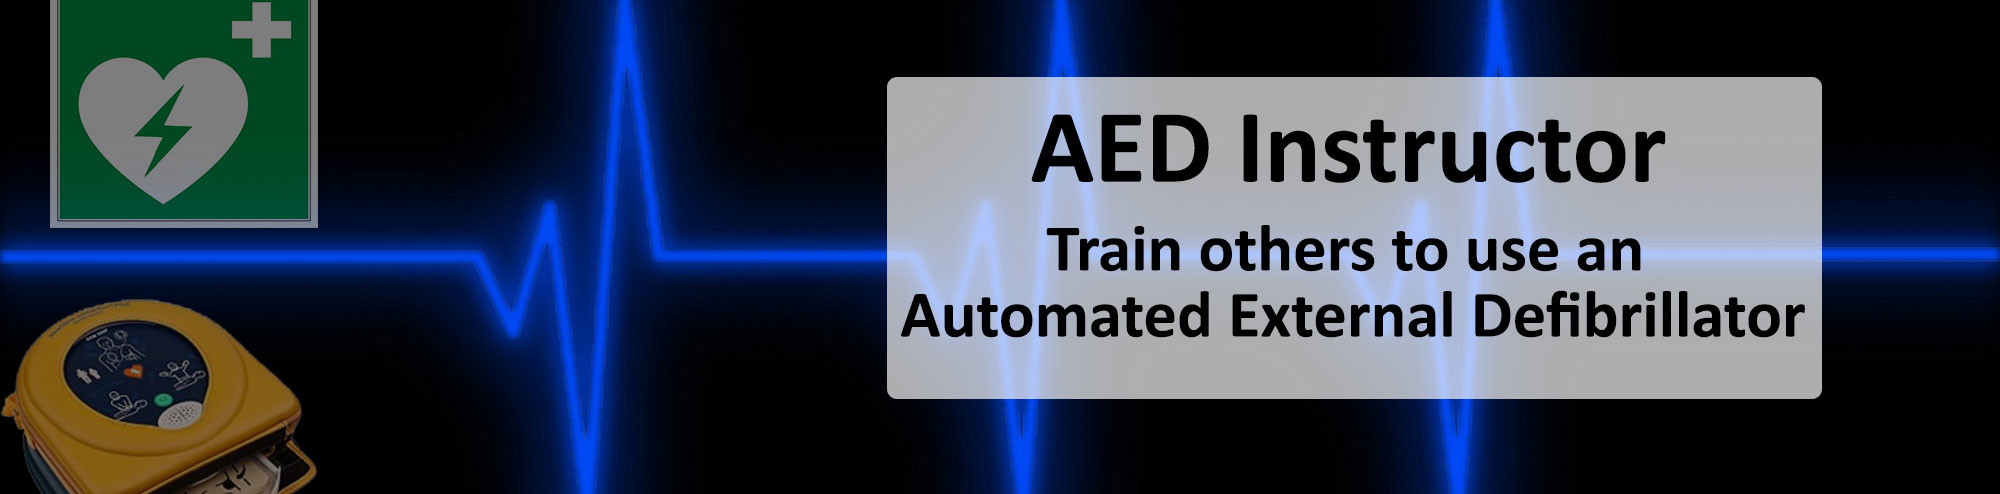 aed instructor defibrillator trainer